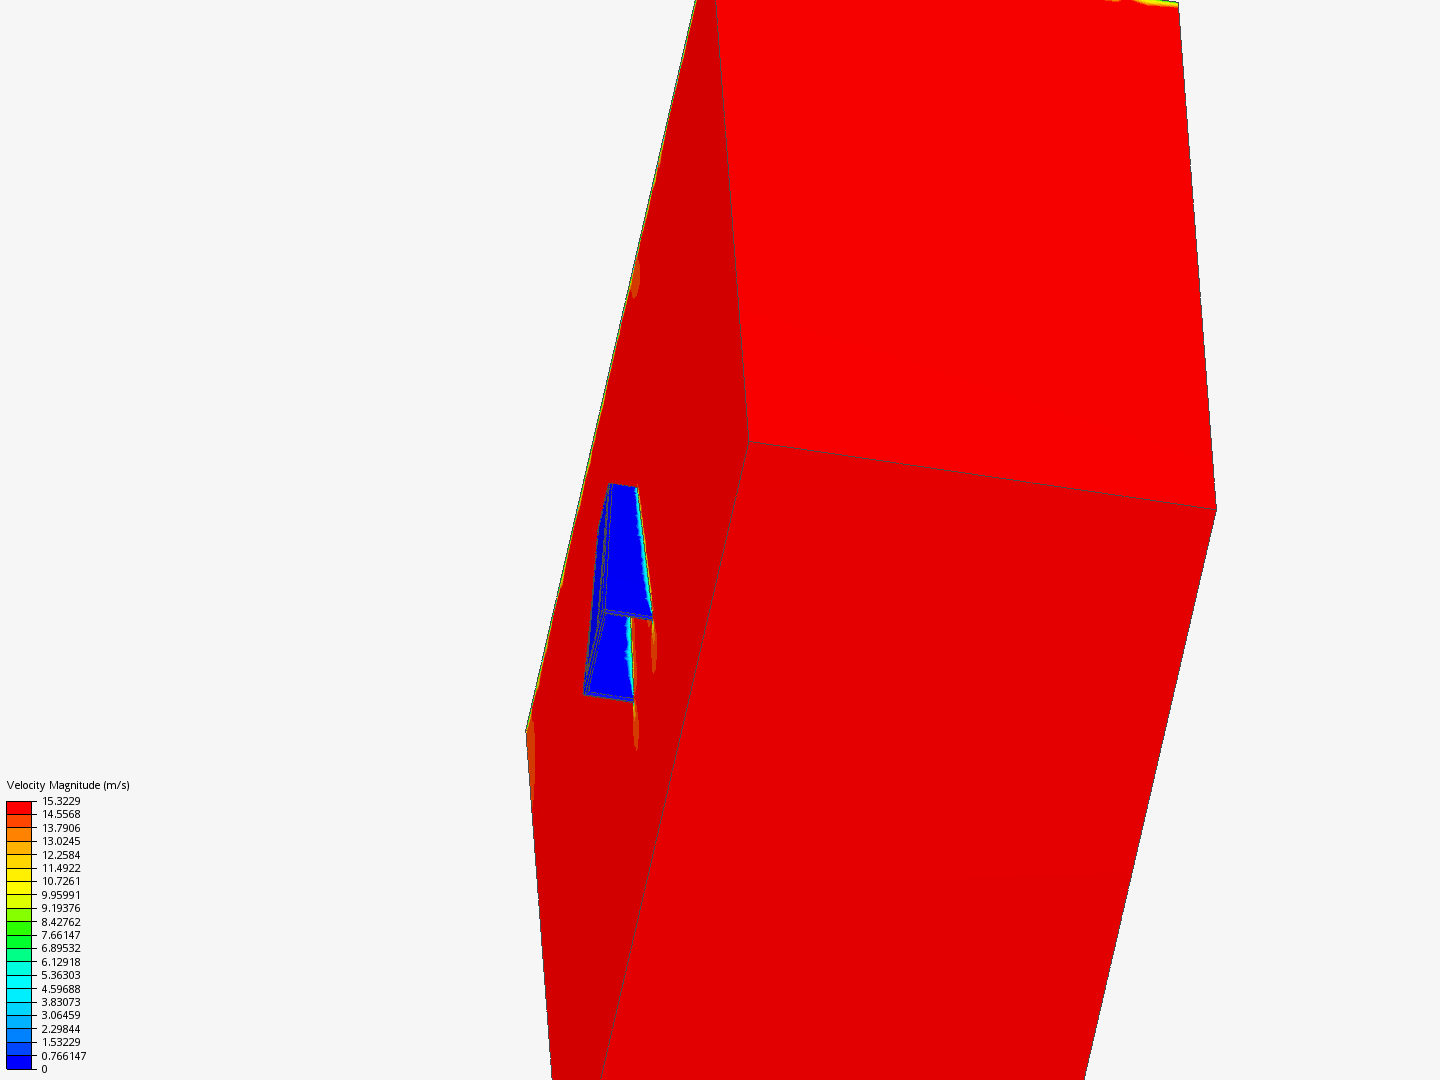 Fluid analysis on an MHD thruster image